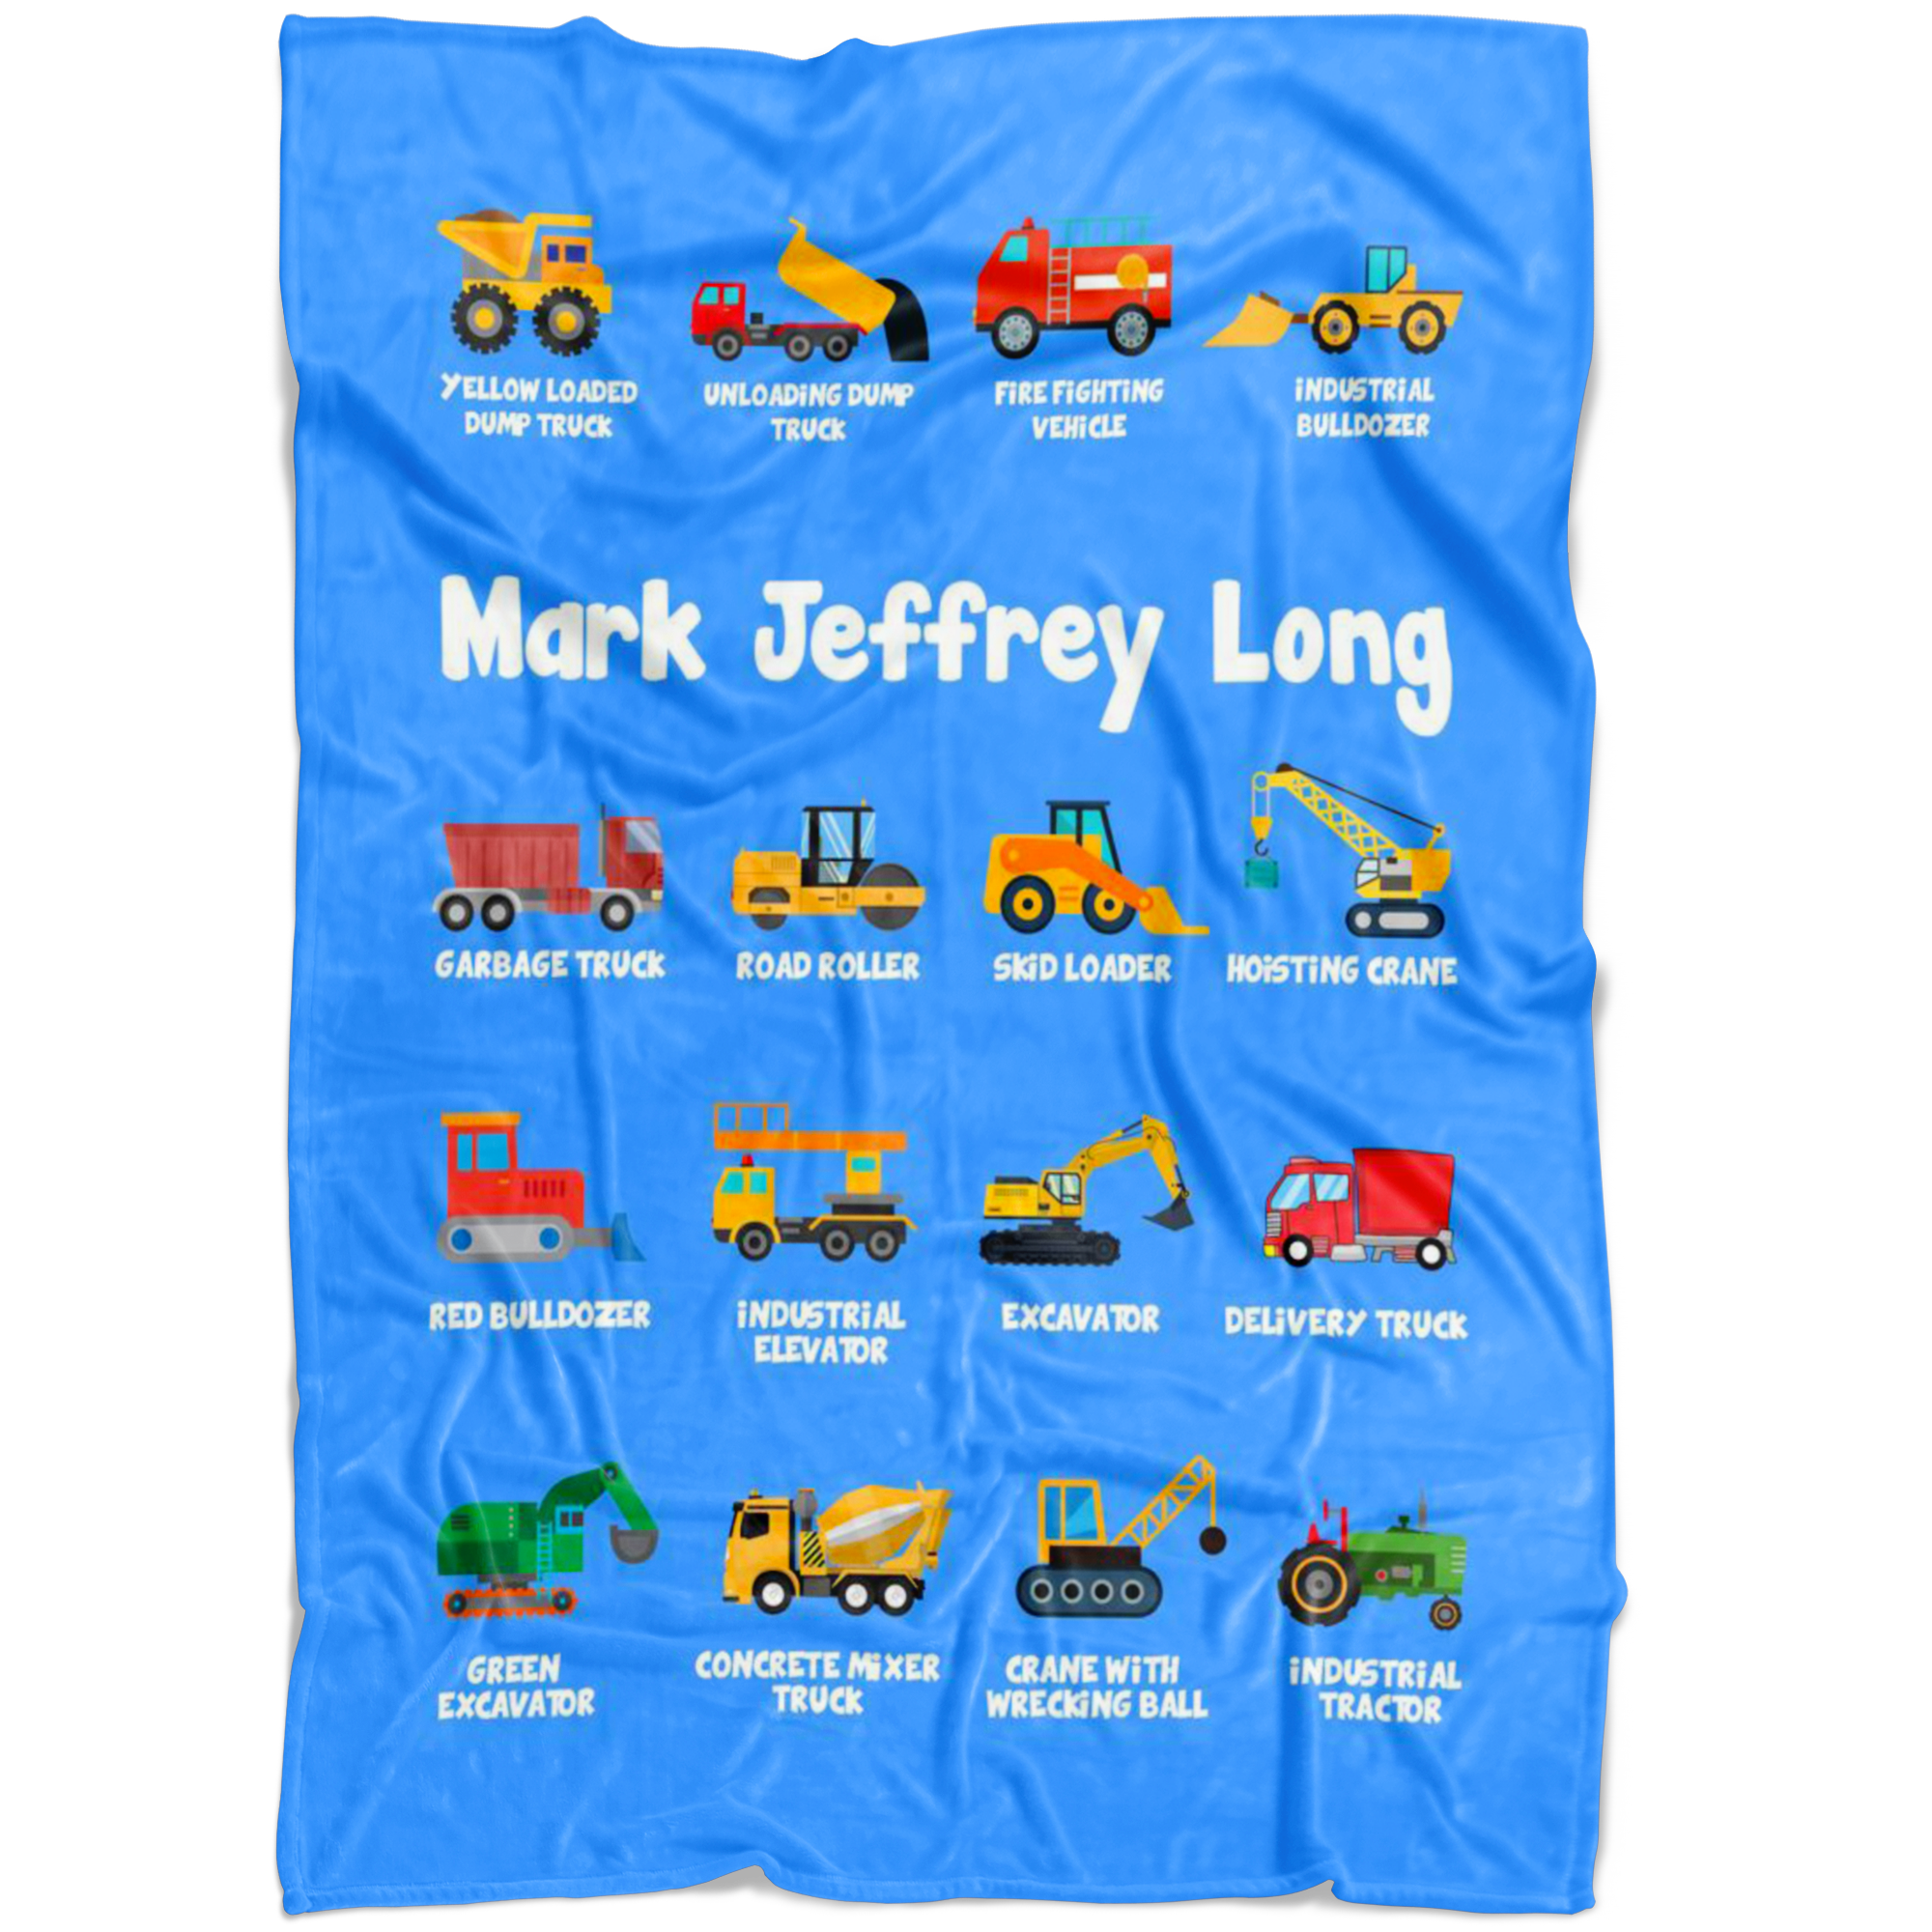 Mark Jeffrey Long Construction Blanket Blue